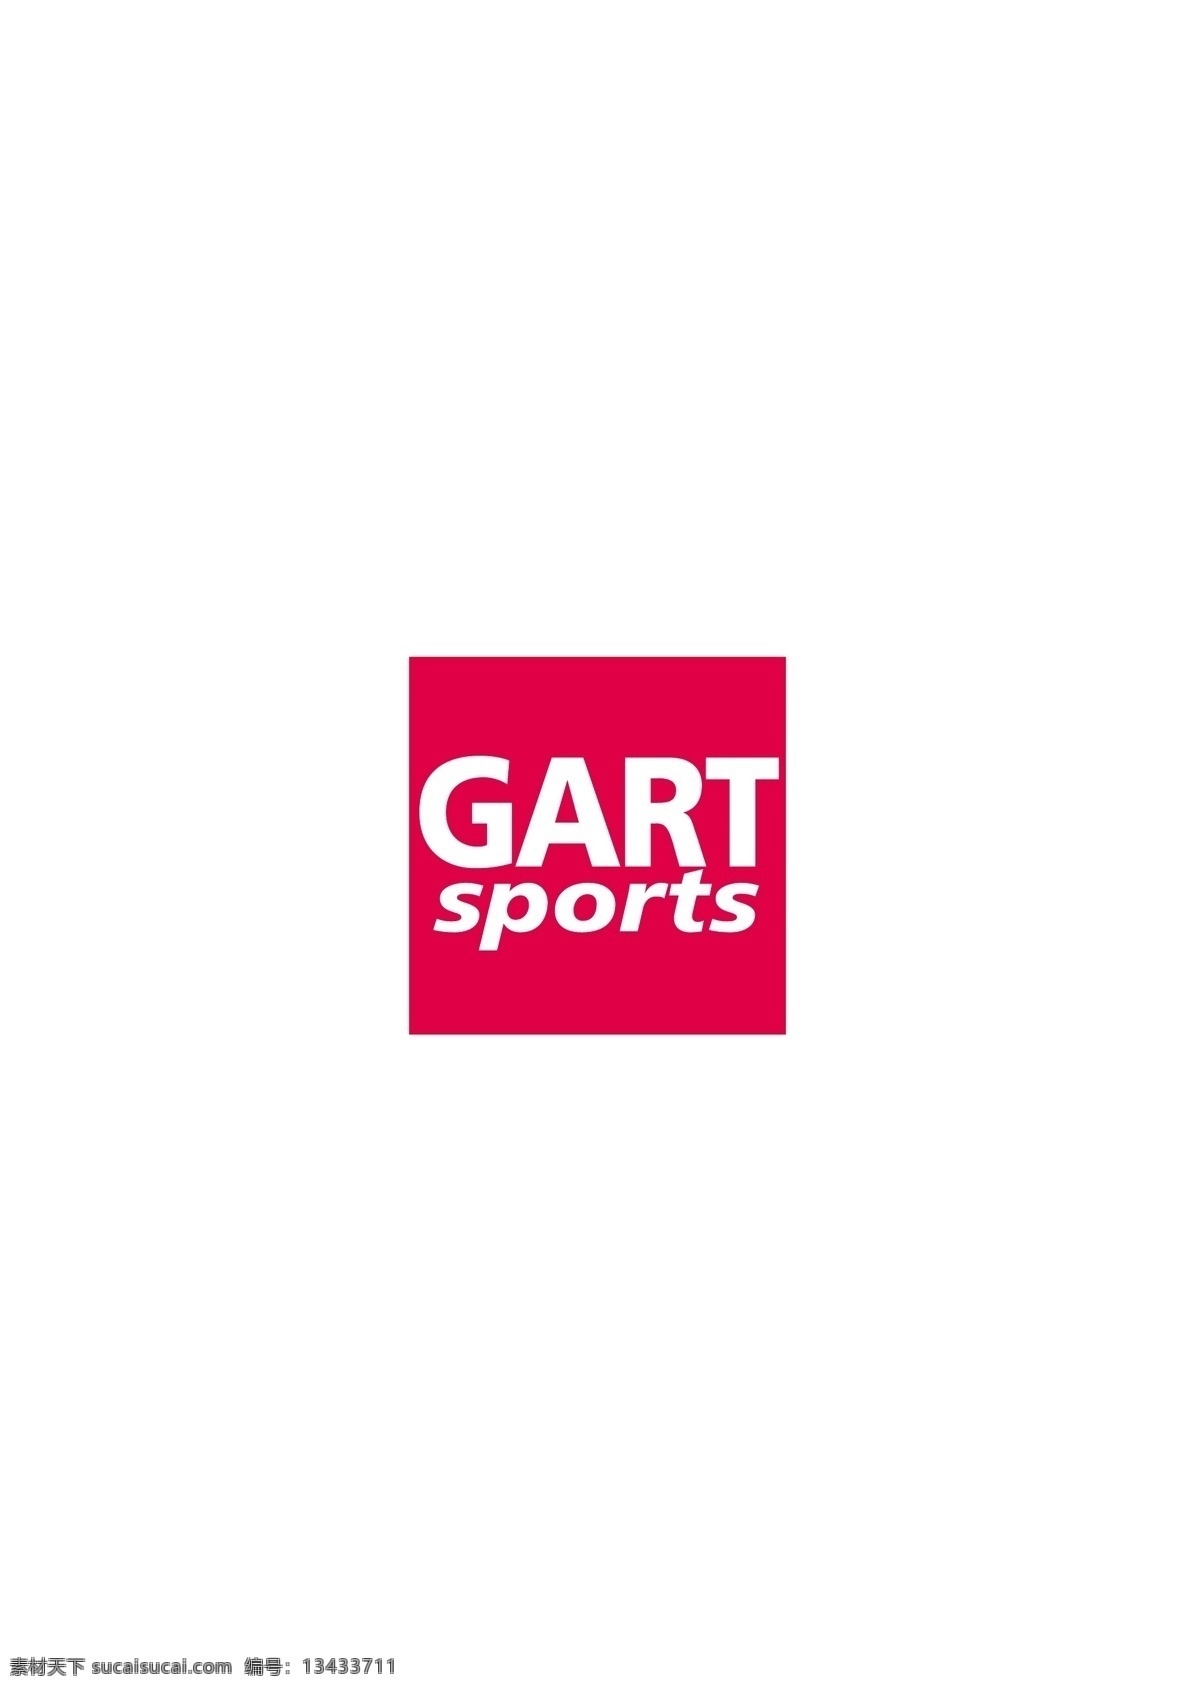 gartsports1 logo 设计欣赏 体育赛事 标志设计 欣赏 矢量下载 网页矢量 商业矢量 logo大全 红色